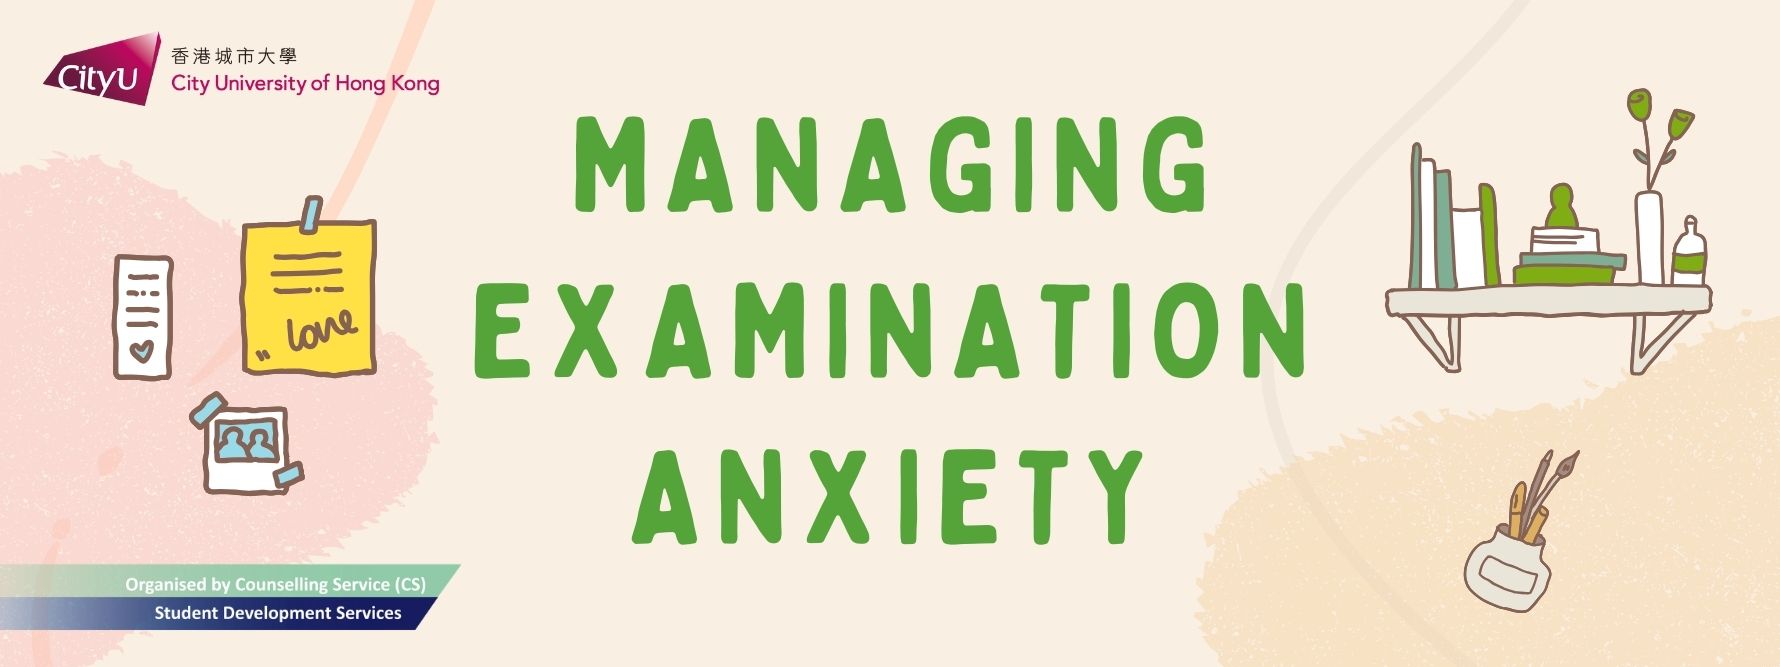 Managing Examination Anxiety